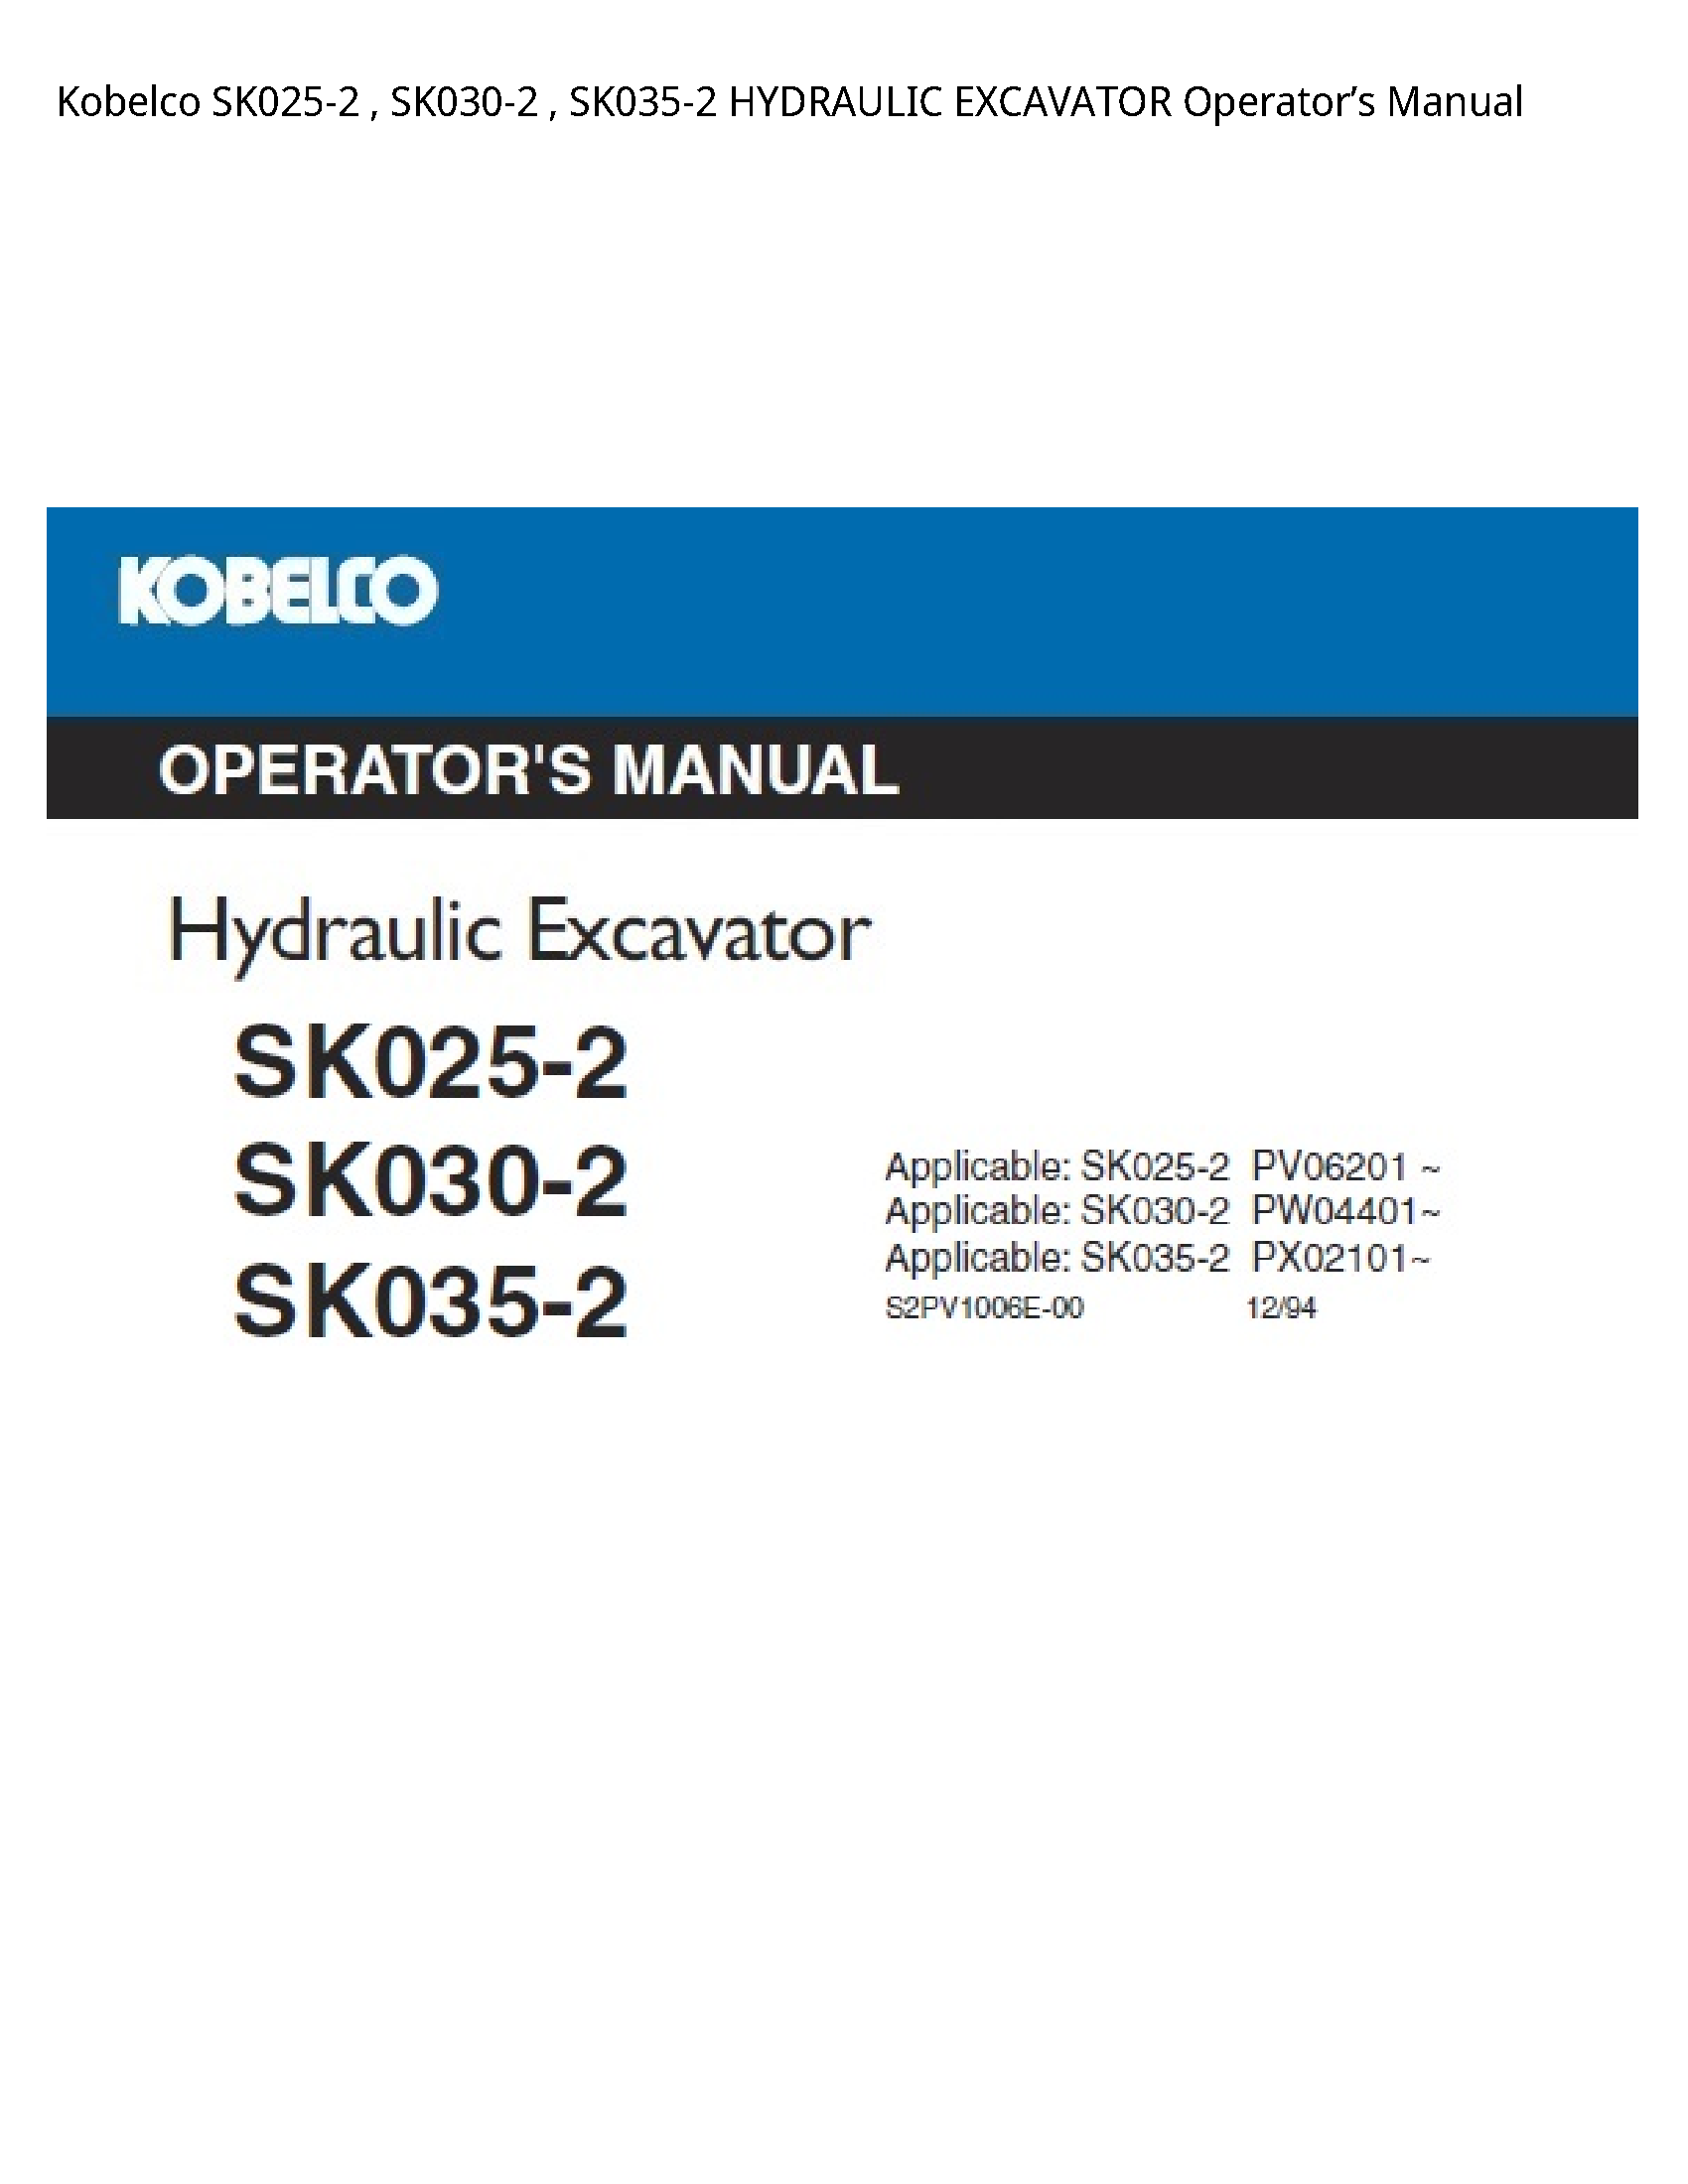 Kobelco SK025-2 HYDRAULIC EXCAVATOR Operator’s manual